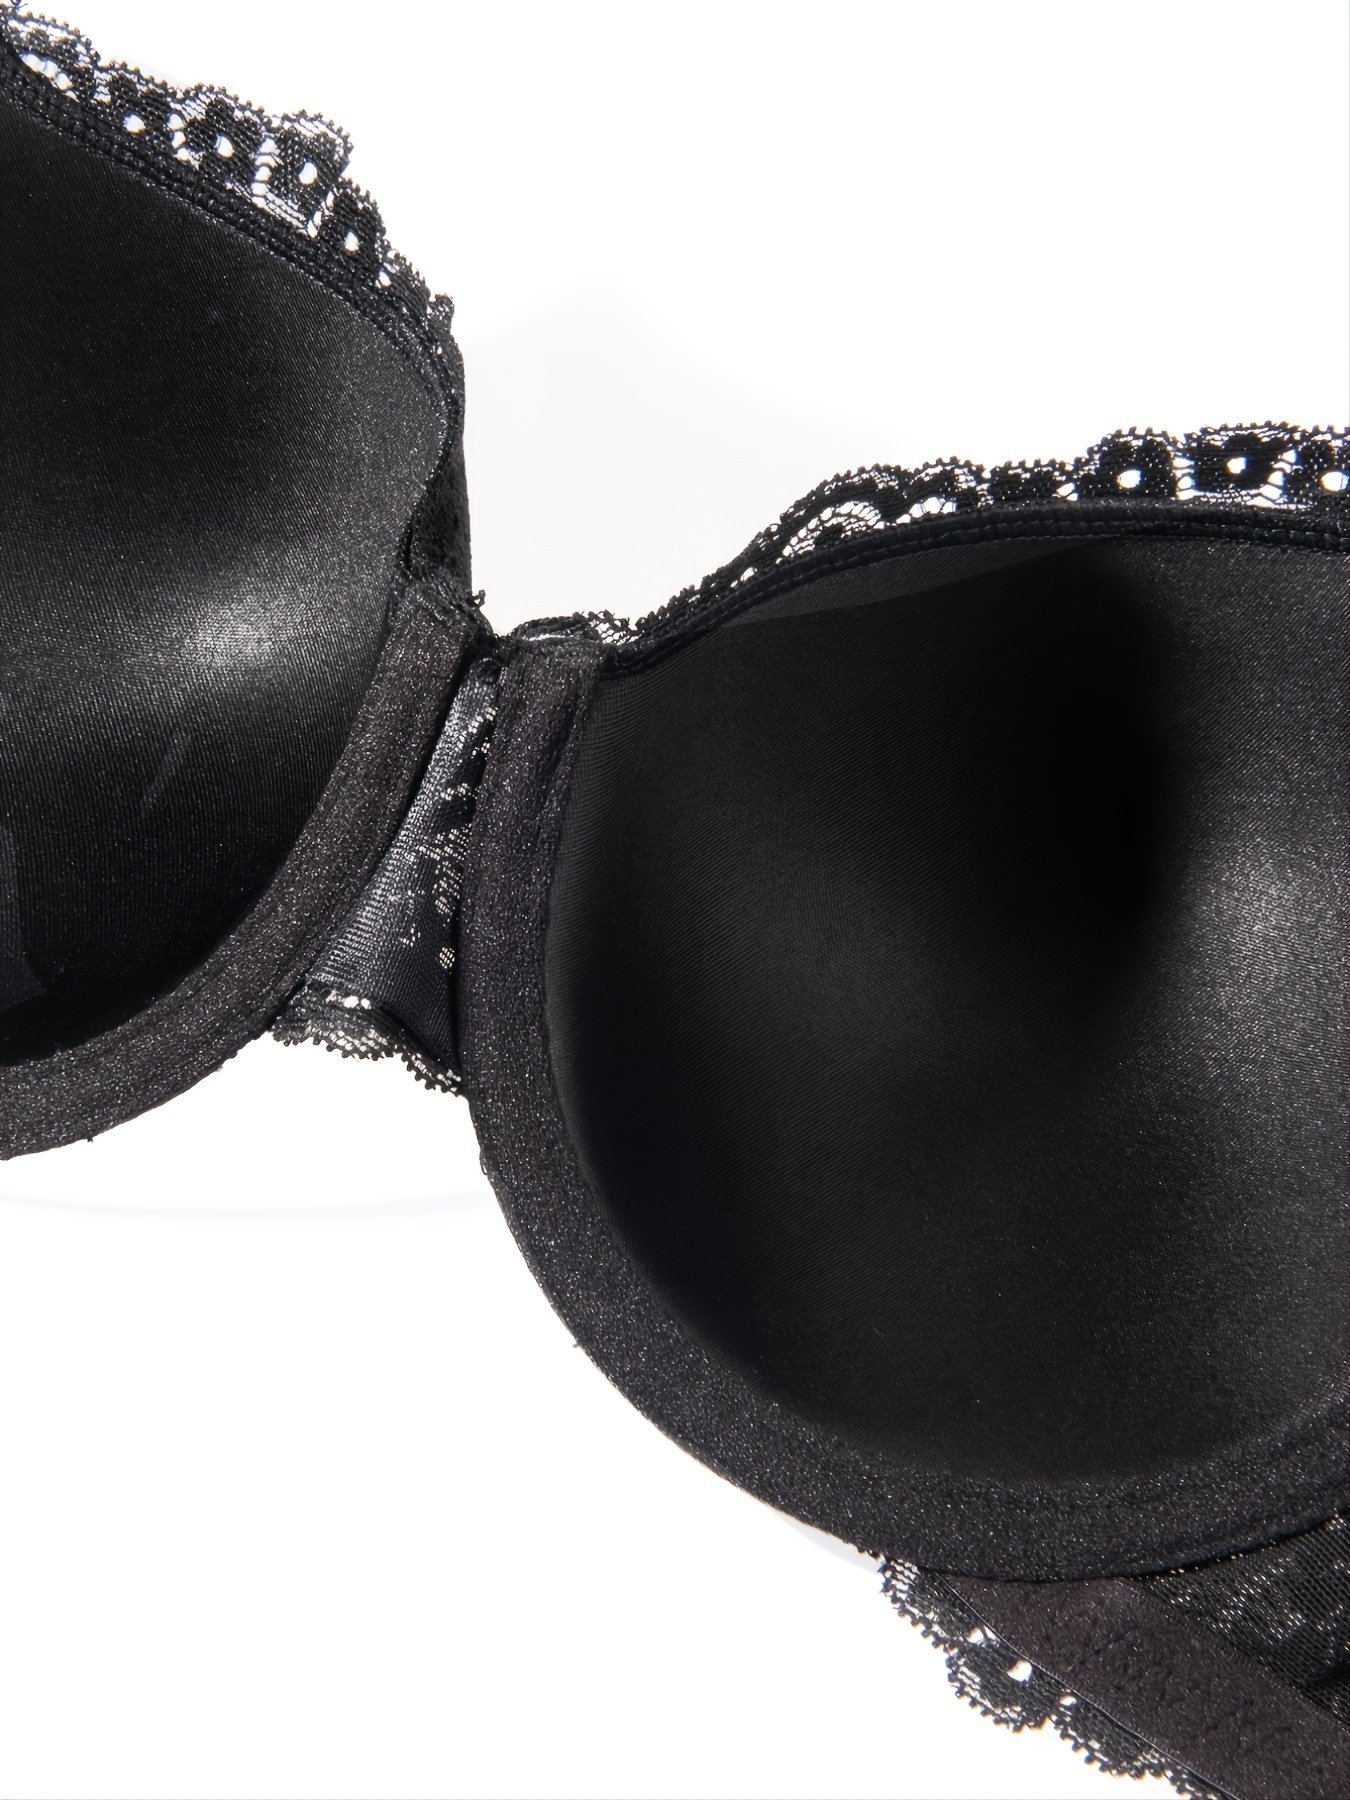 YDKZYMD Womens Push Up Bra Lace Padded Large Bras Plus Size Solid  Compression Bras Black 34/75B 